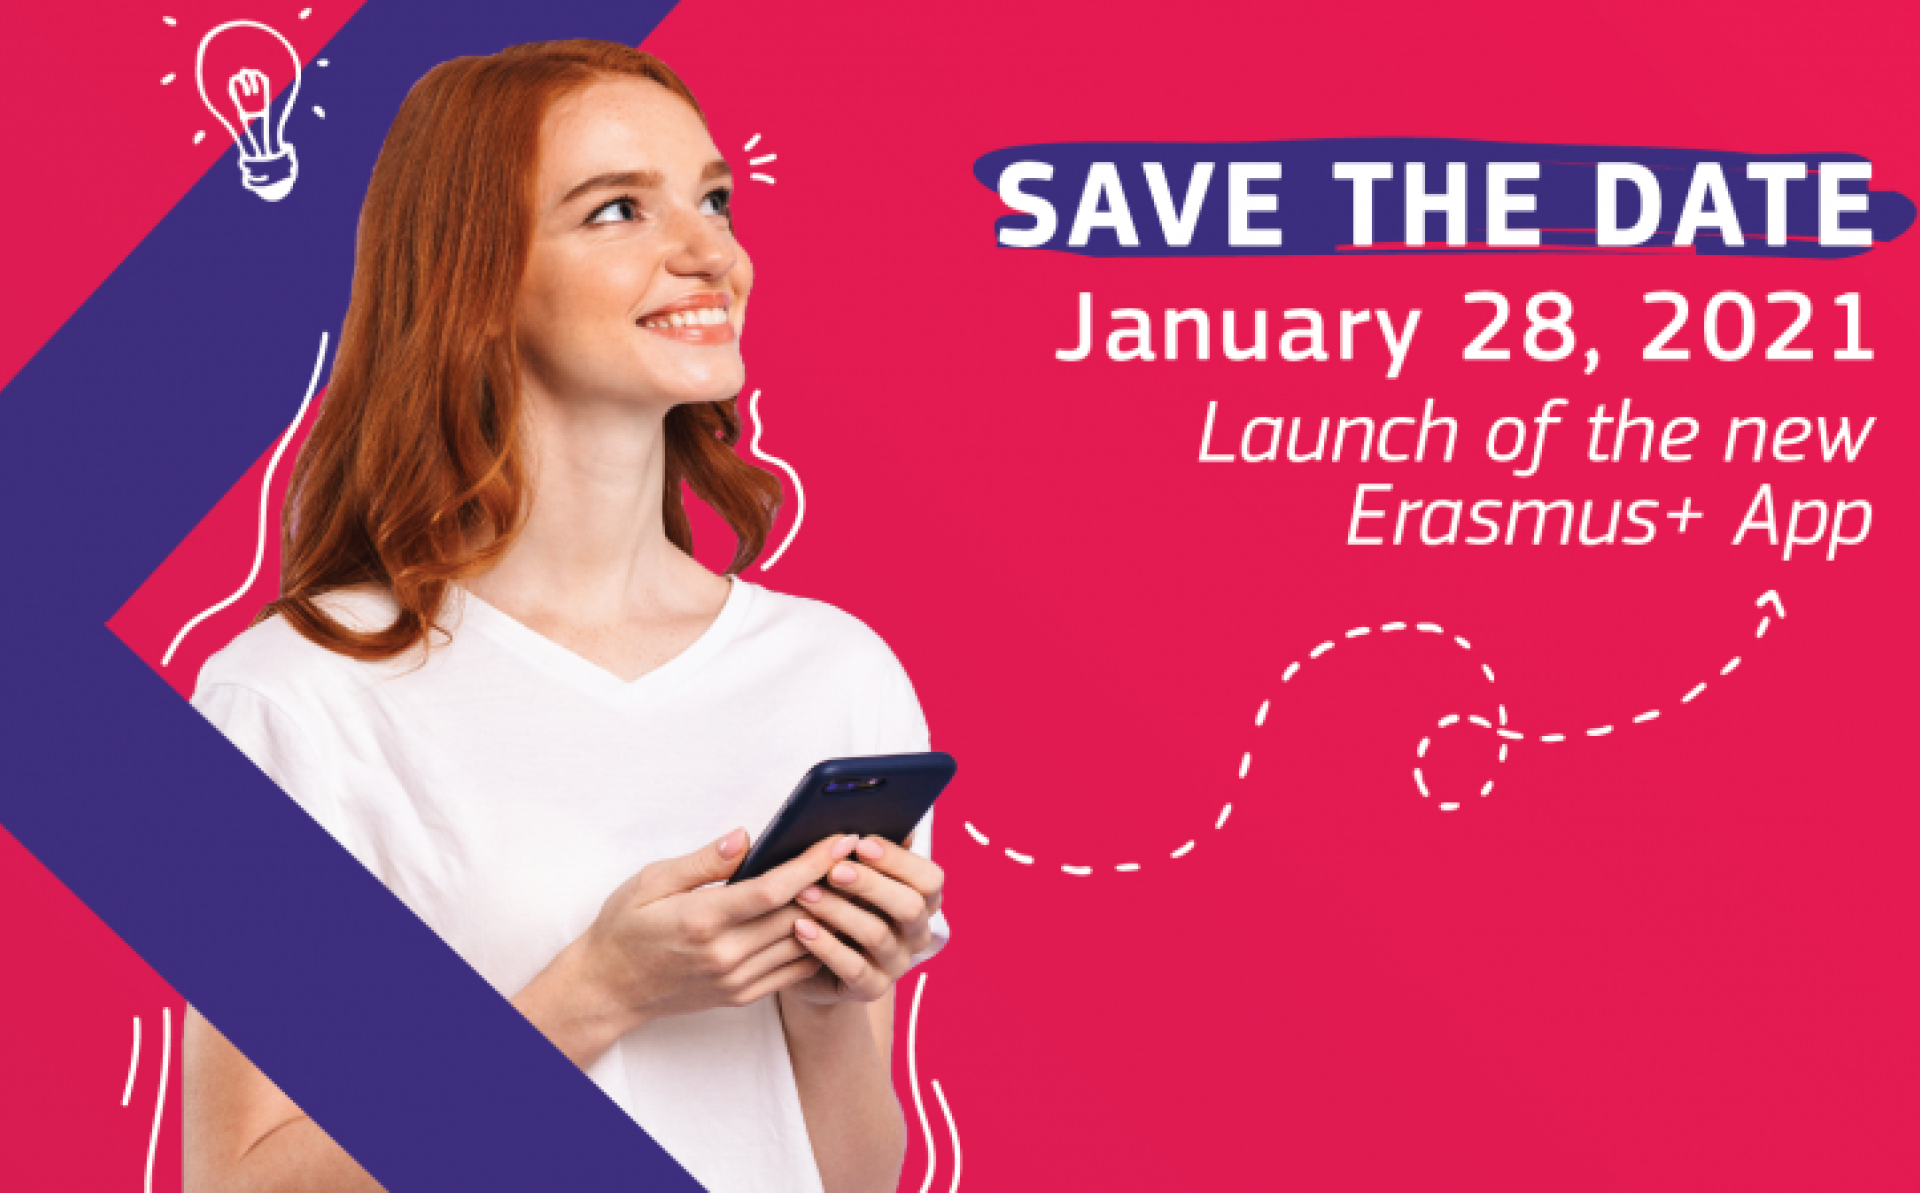 A new Erasmus+ App for the new Erasmus+ programme